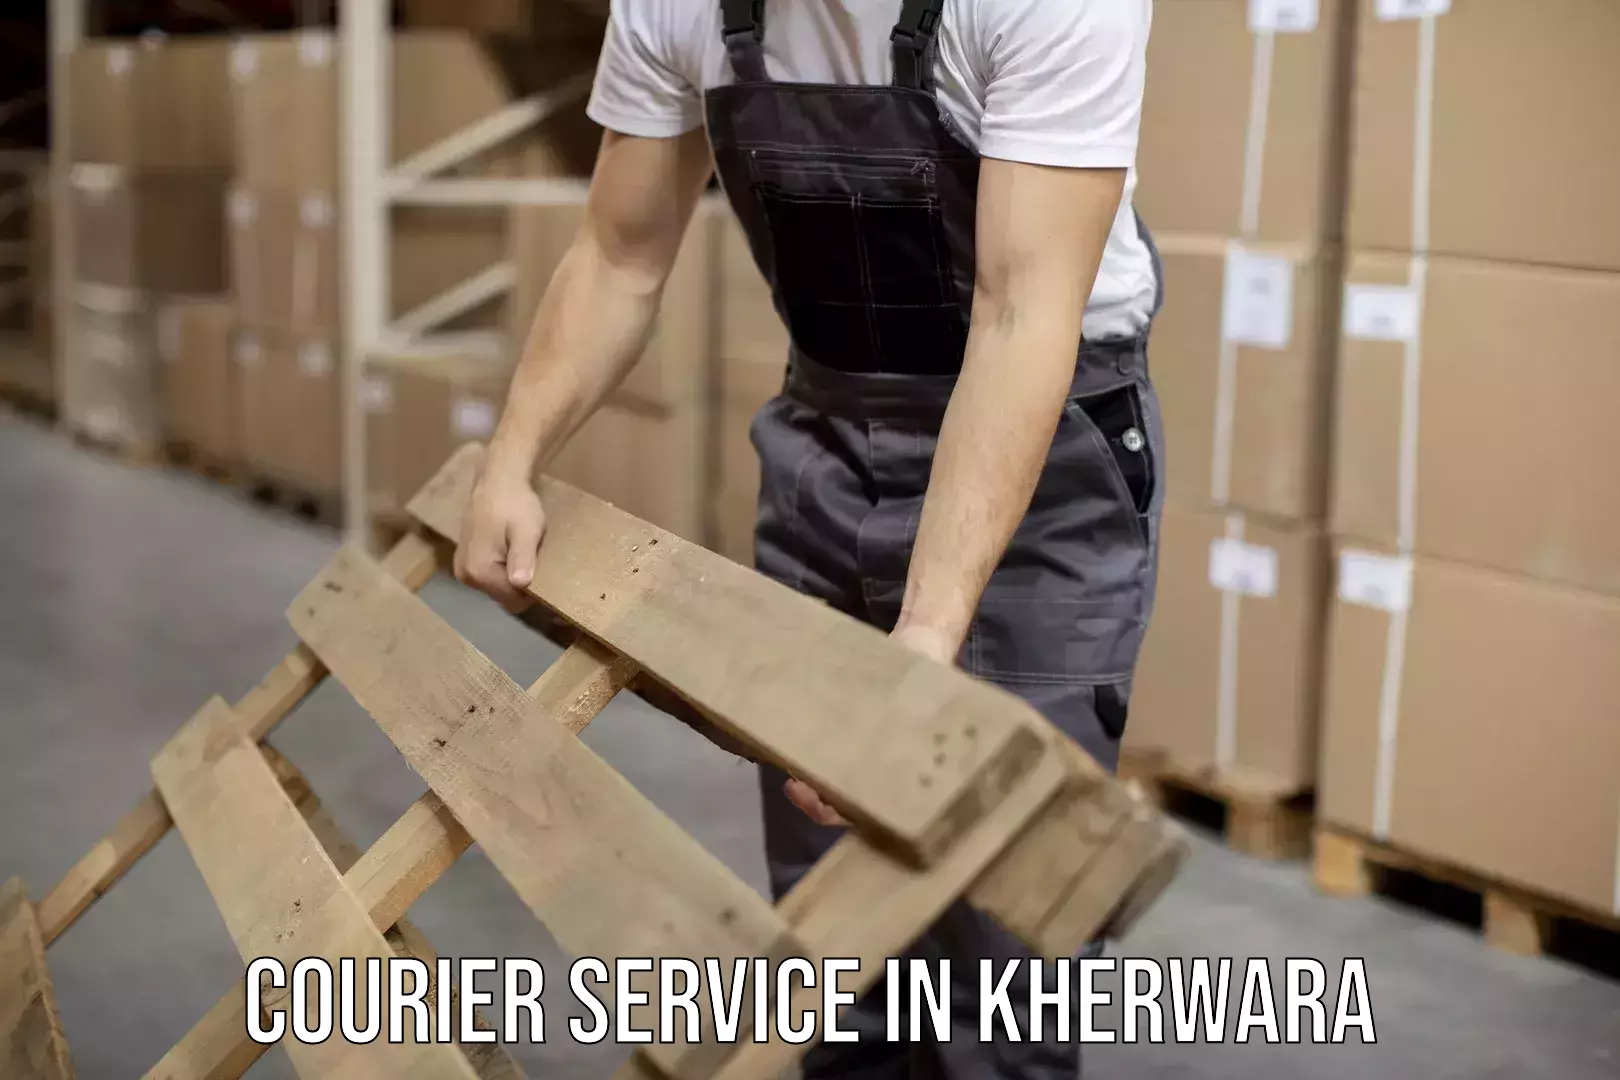 Express logistics service in Kherwara